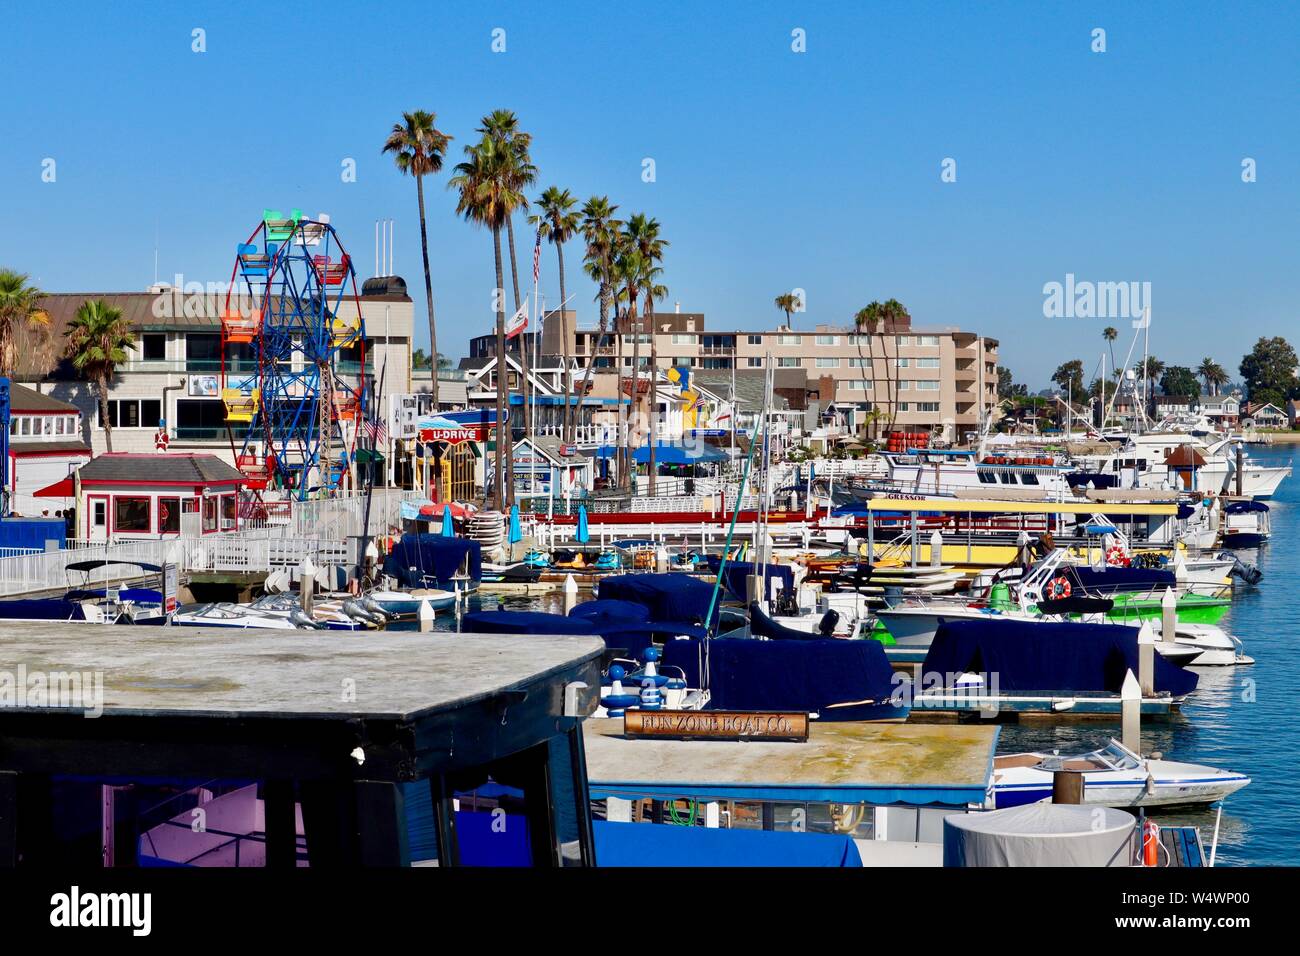 Bateaux amarrés à Balboa Fun Zone dans la péninsule de Balboa à Newport Beach, CA Banque D'Images